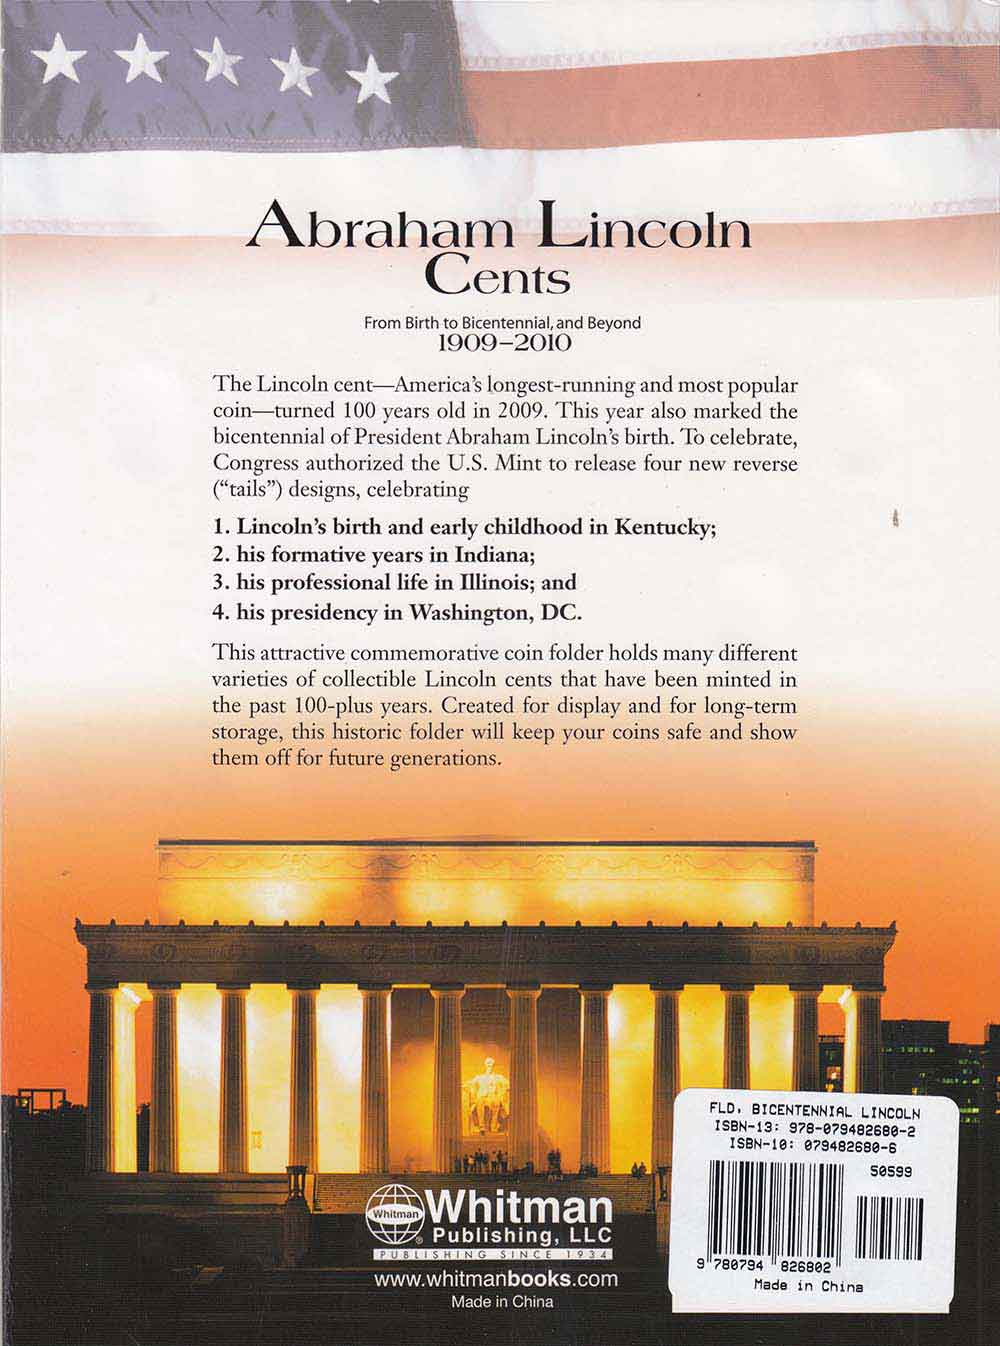 Birth to Bicentennial Abraham Lincoln Cents Folder & Beyond:1982 to 1909-2010 